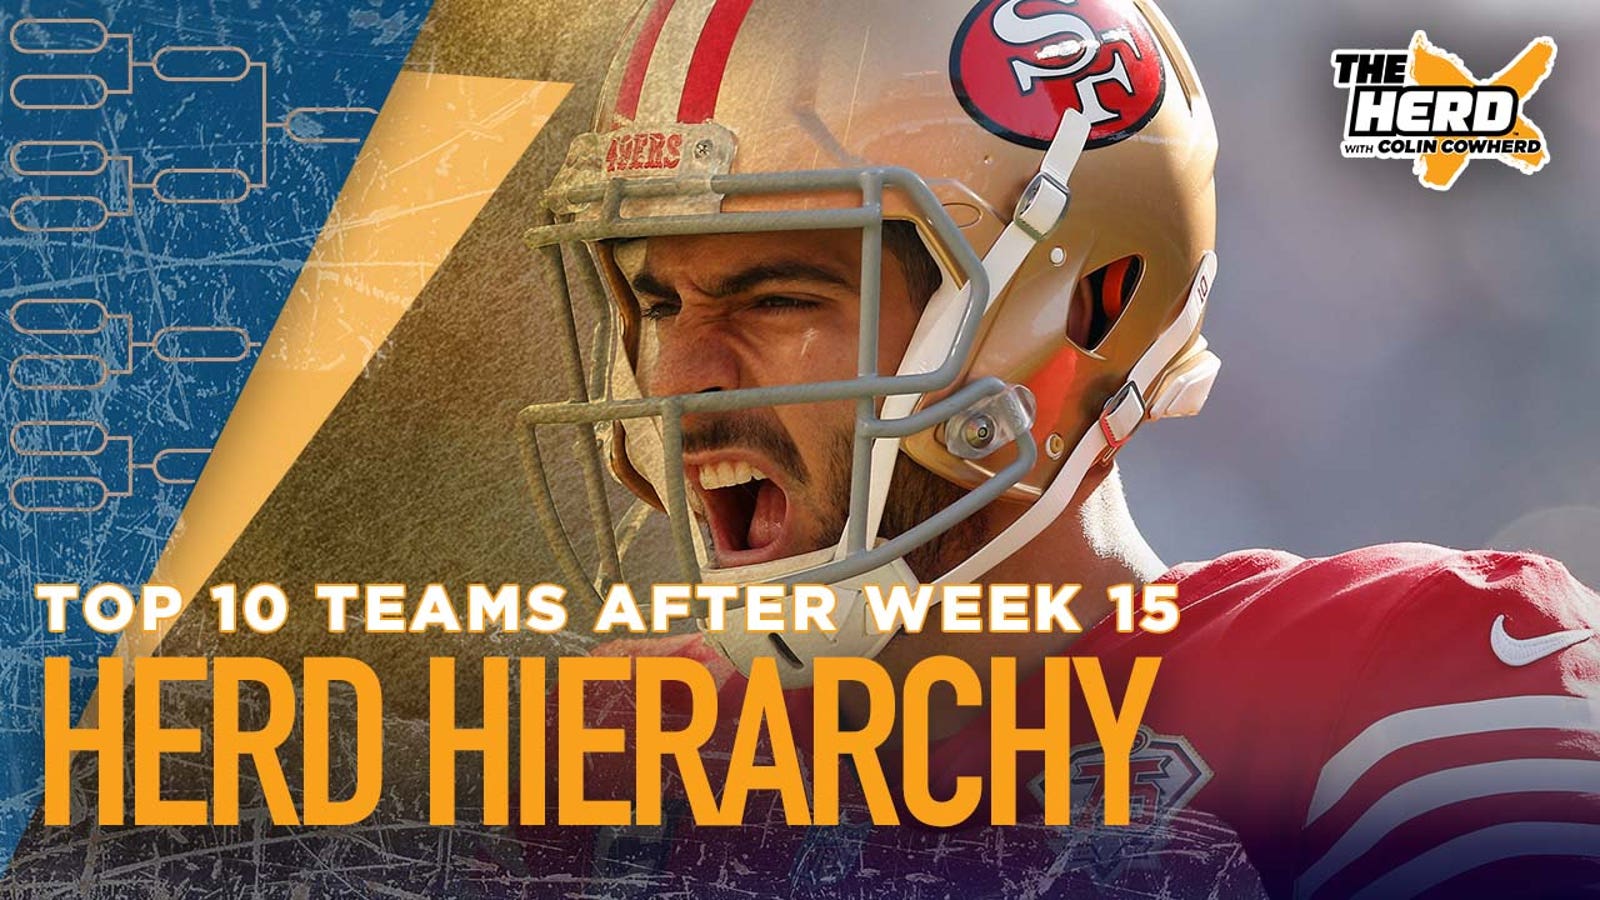 Herd Hierarchy: Colin ranks the NFL's top 10 teams